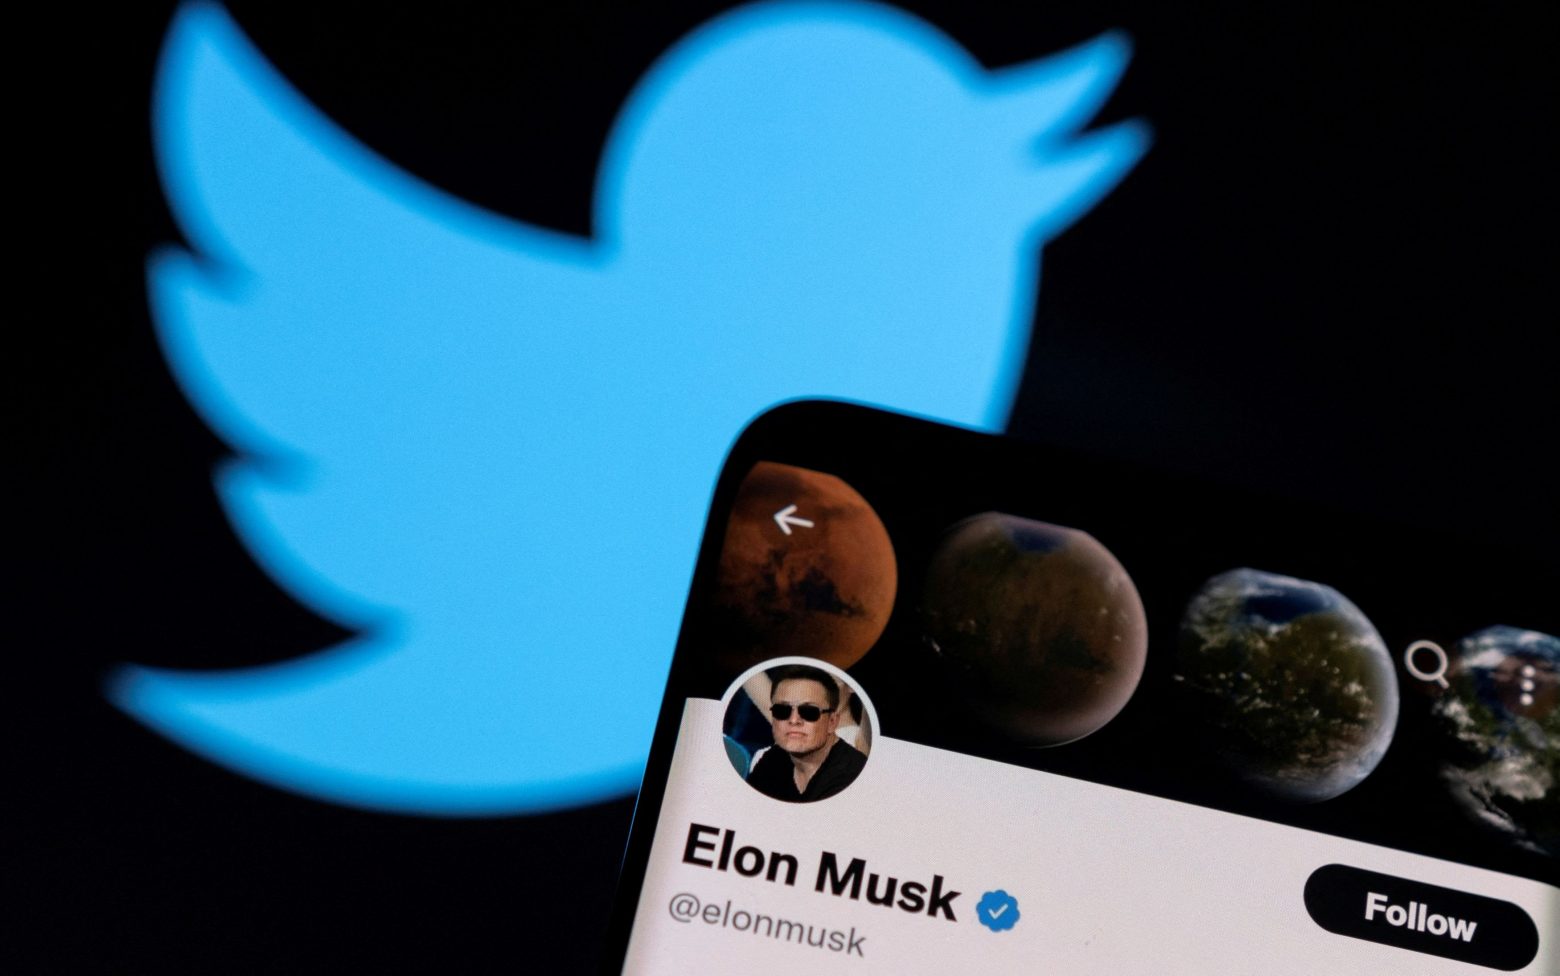 Twitter: Πάνω από 500 διαφημιζόμενοι εγκατέλειψαν την πλατφόρμα από όταν πέρασε στον Ίλον Μασκ